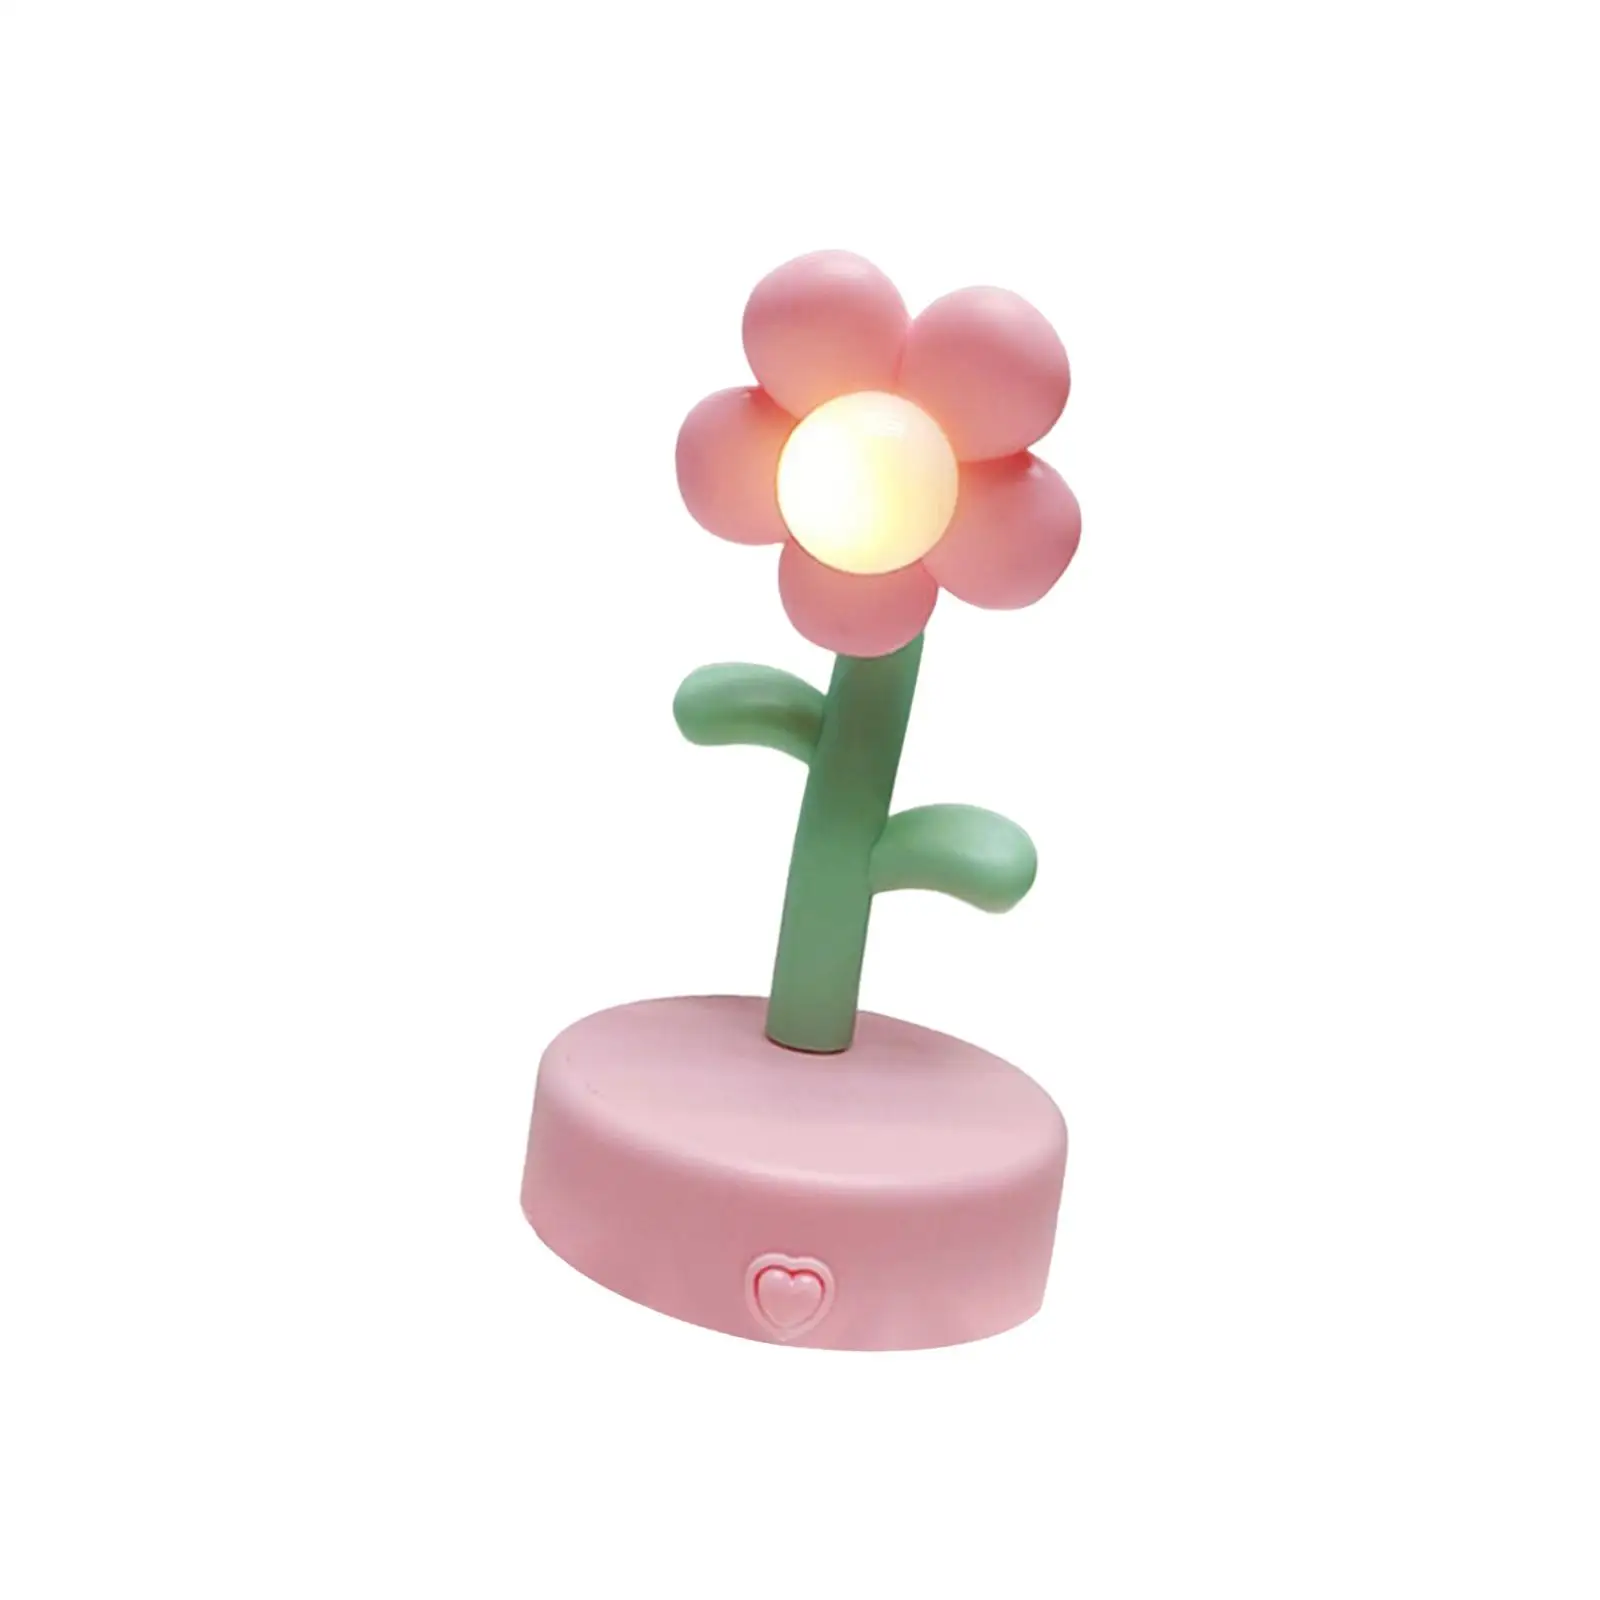 Cute Flower Table Lamp Night Light Modern Decorative Desk Lamp NightStand Lamp for Home Office Dorm Decor Kids Gift